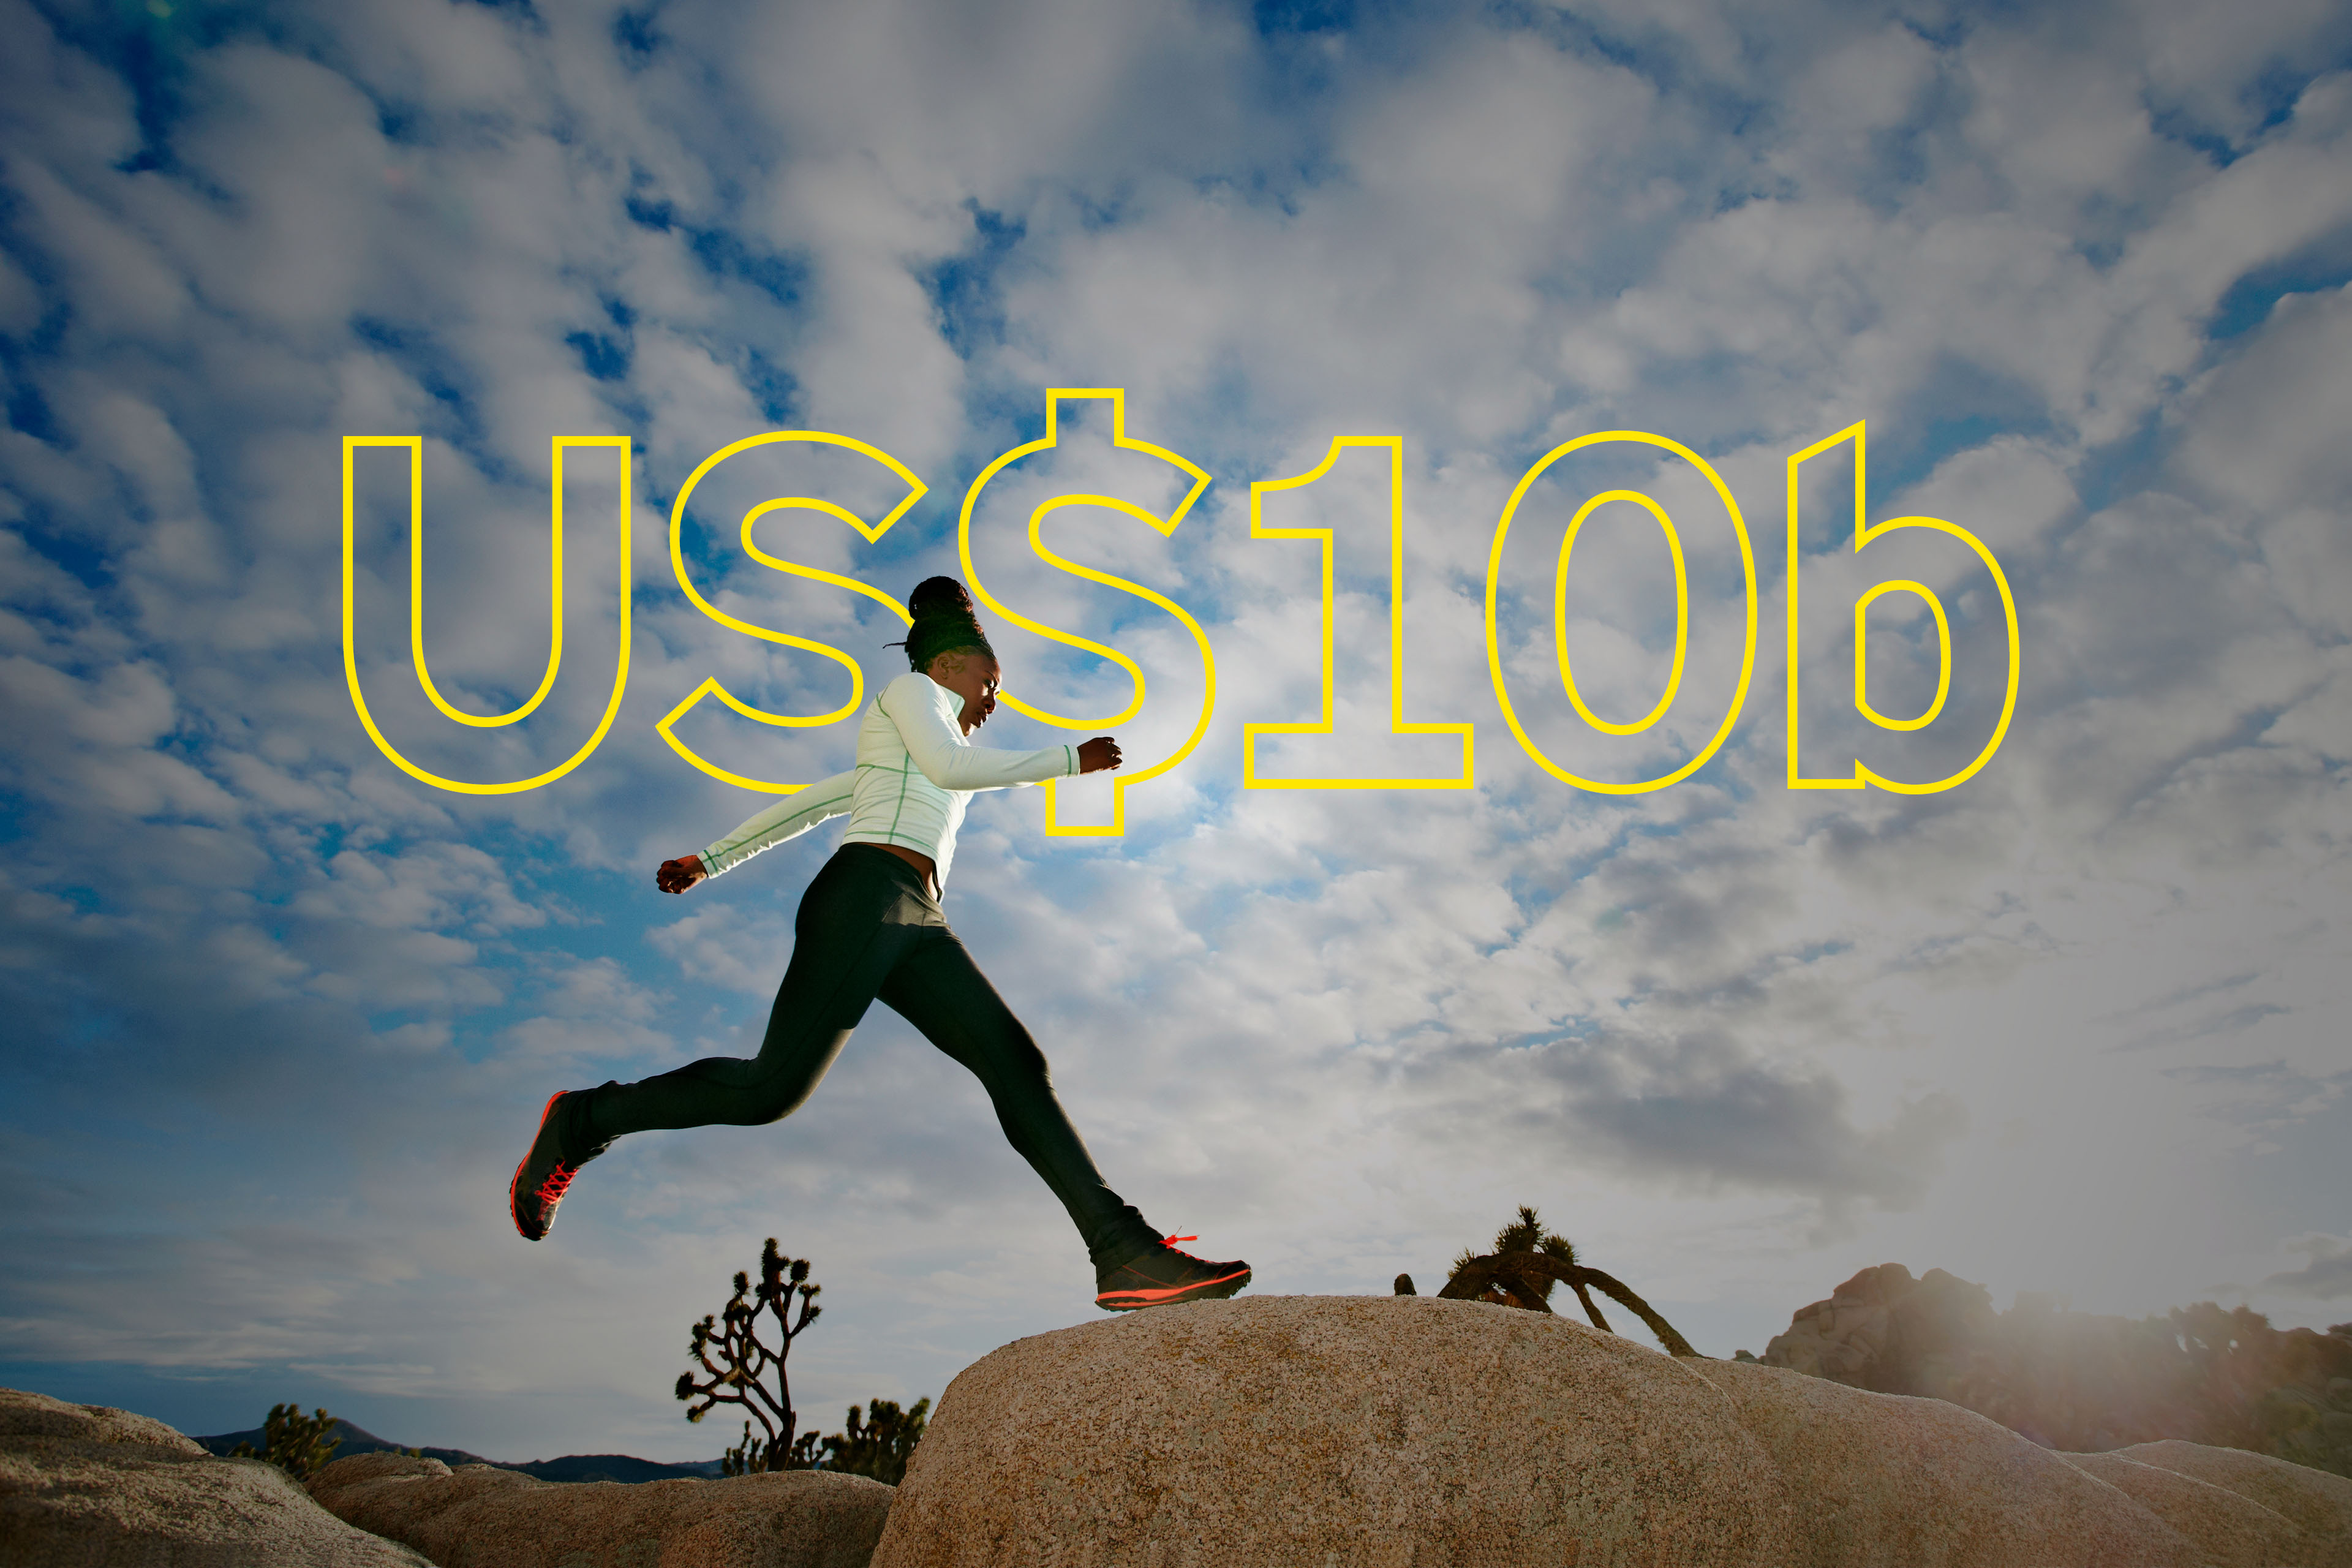 Black runner in desert landscape, Joshua Tree National Park, USA - overlaid is yellow text saying US$10b